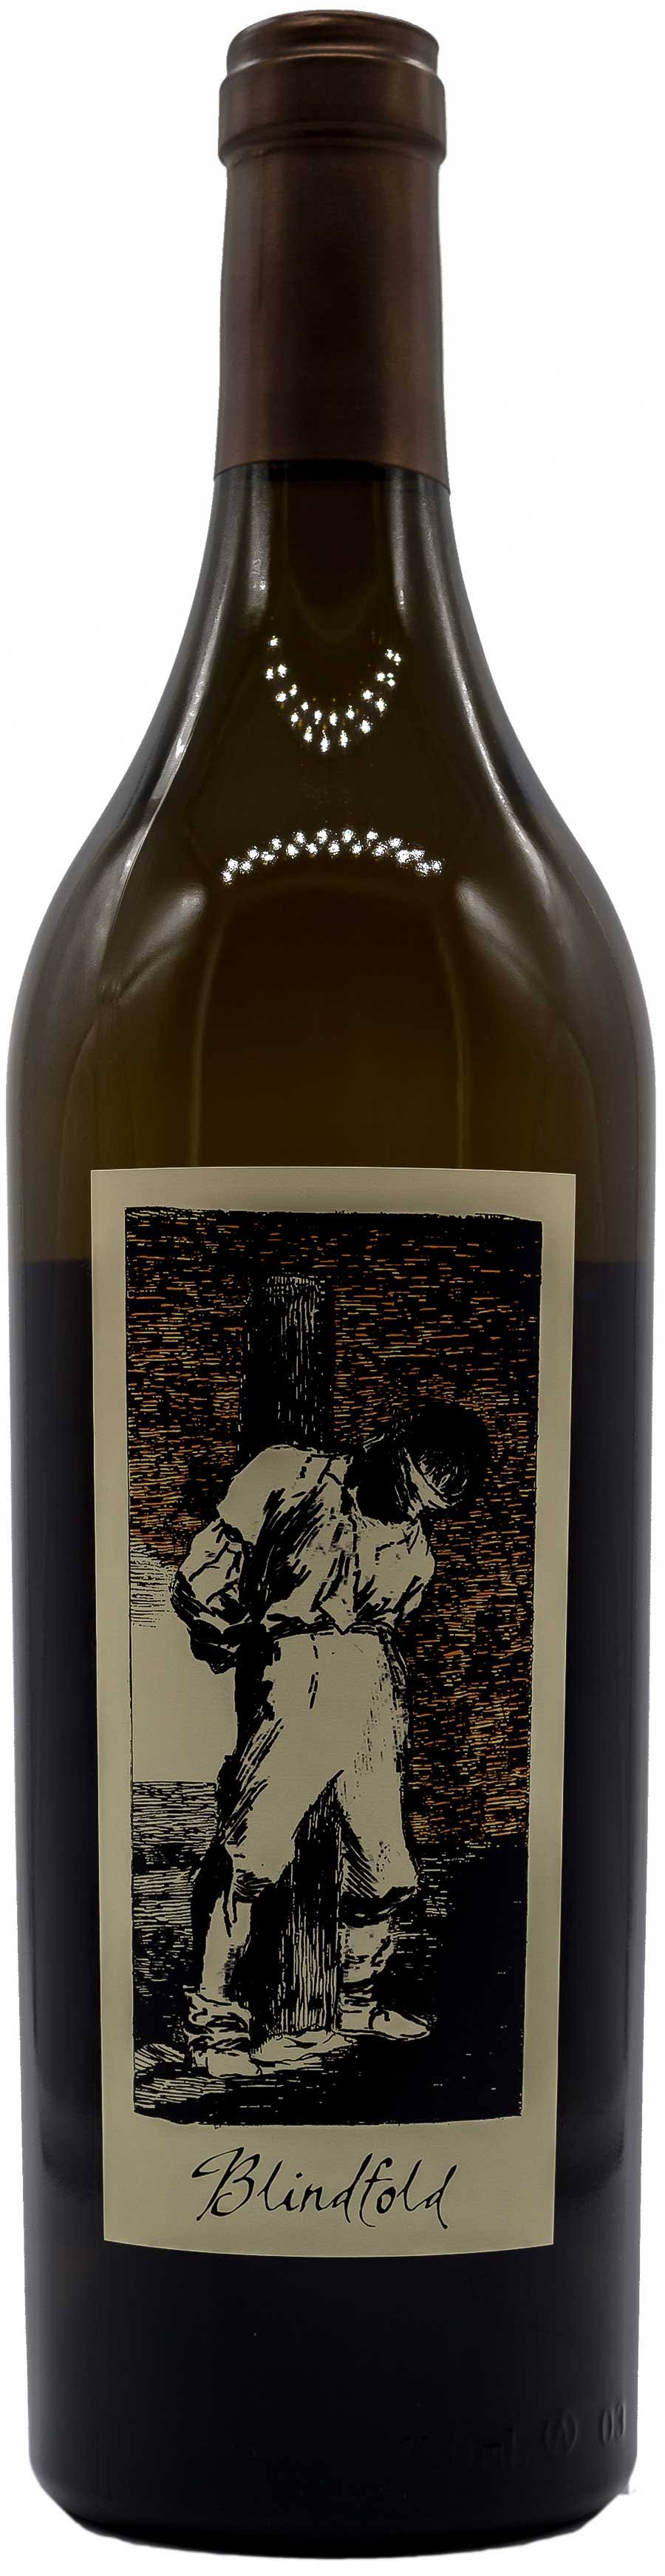 The Prisoner Wine Company Blindfold 2014